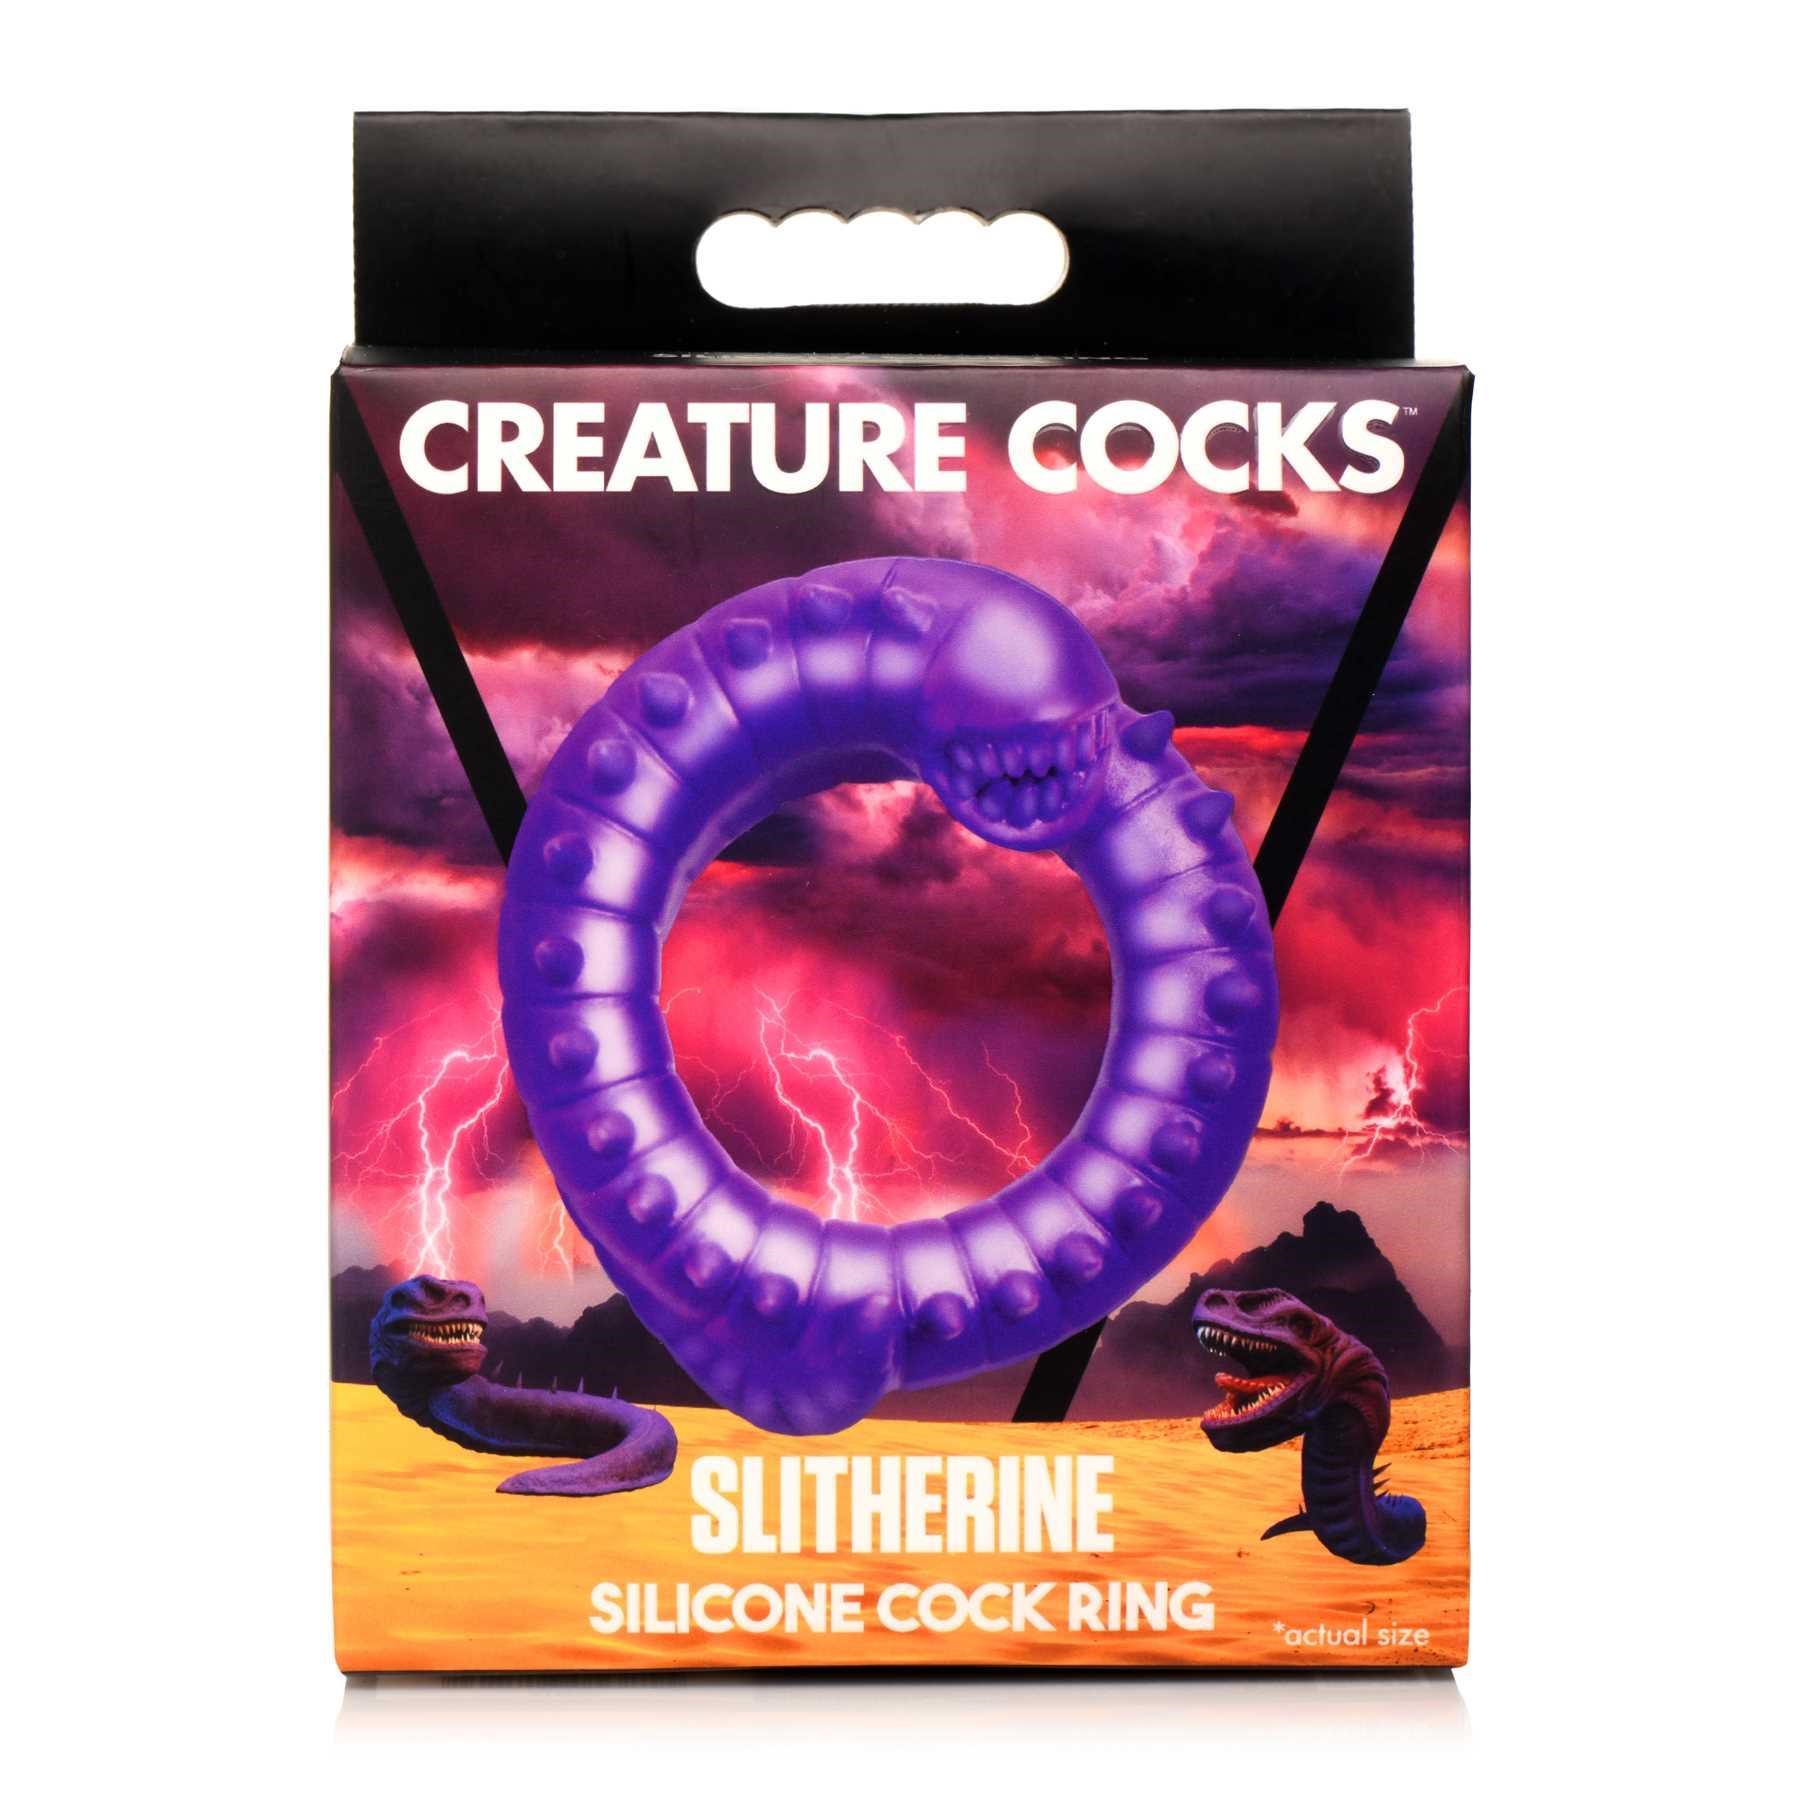 Creature Cocks Slitherine Silicone Cock Ring box